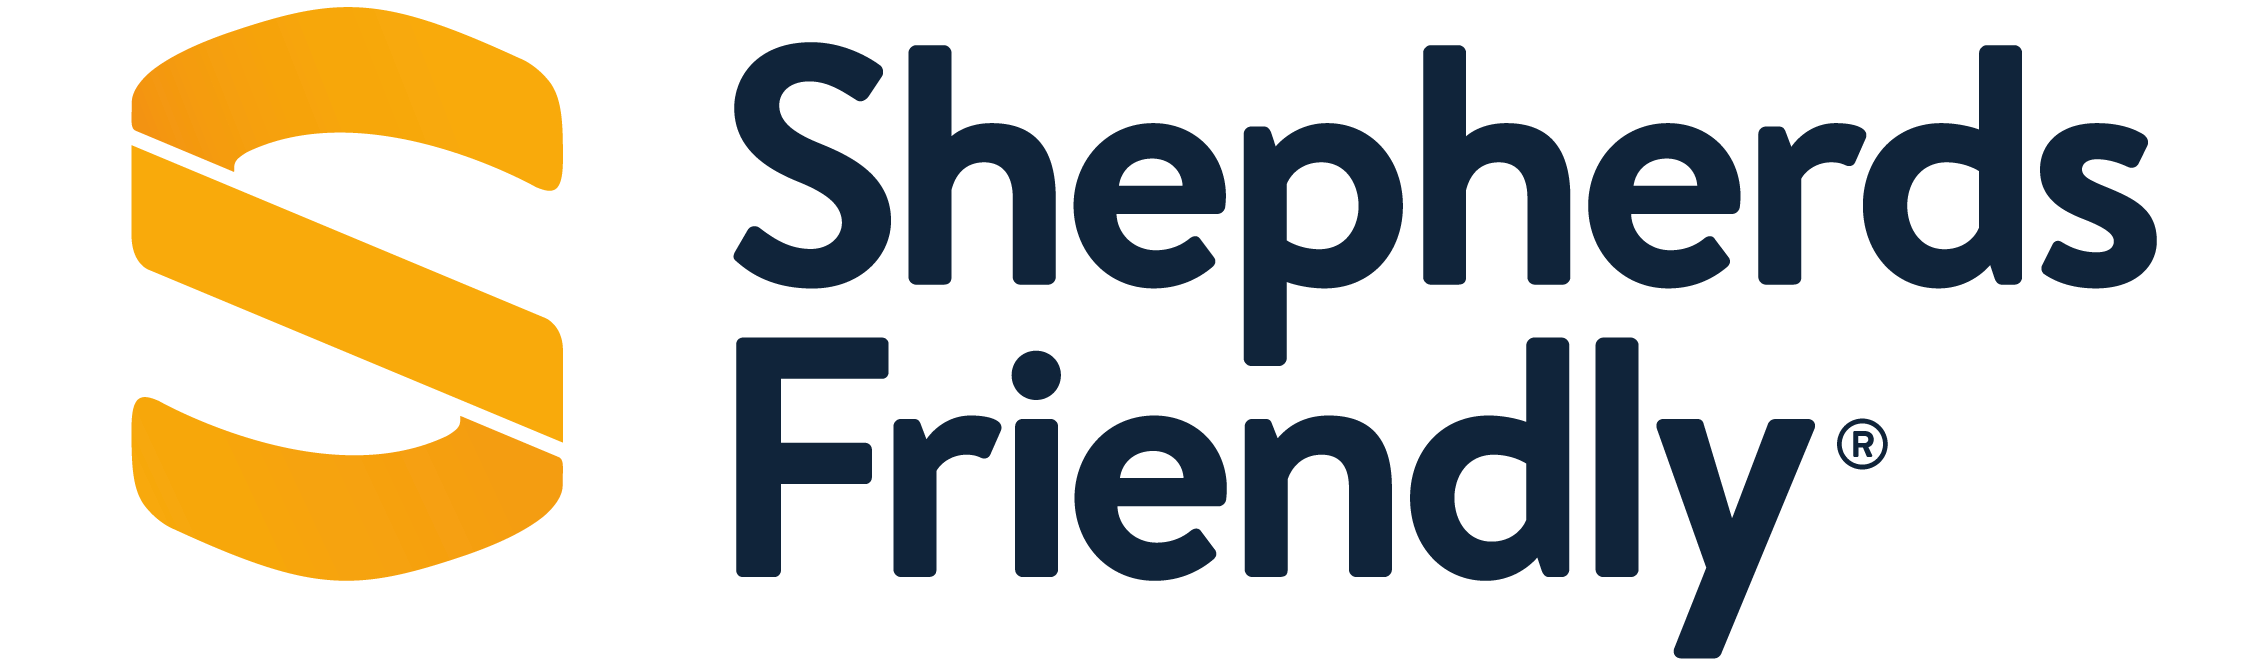 shepherds friendly logo